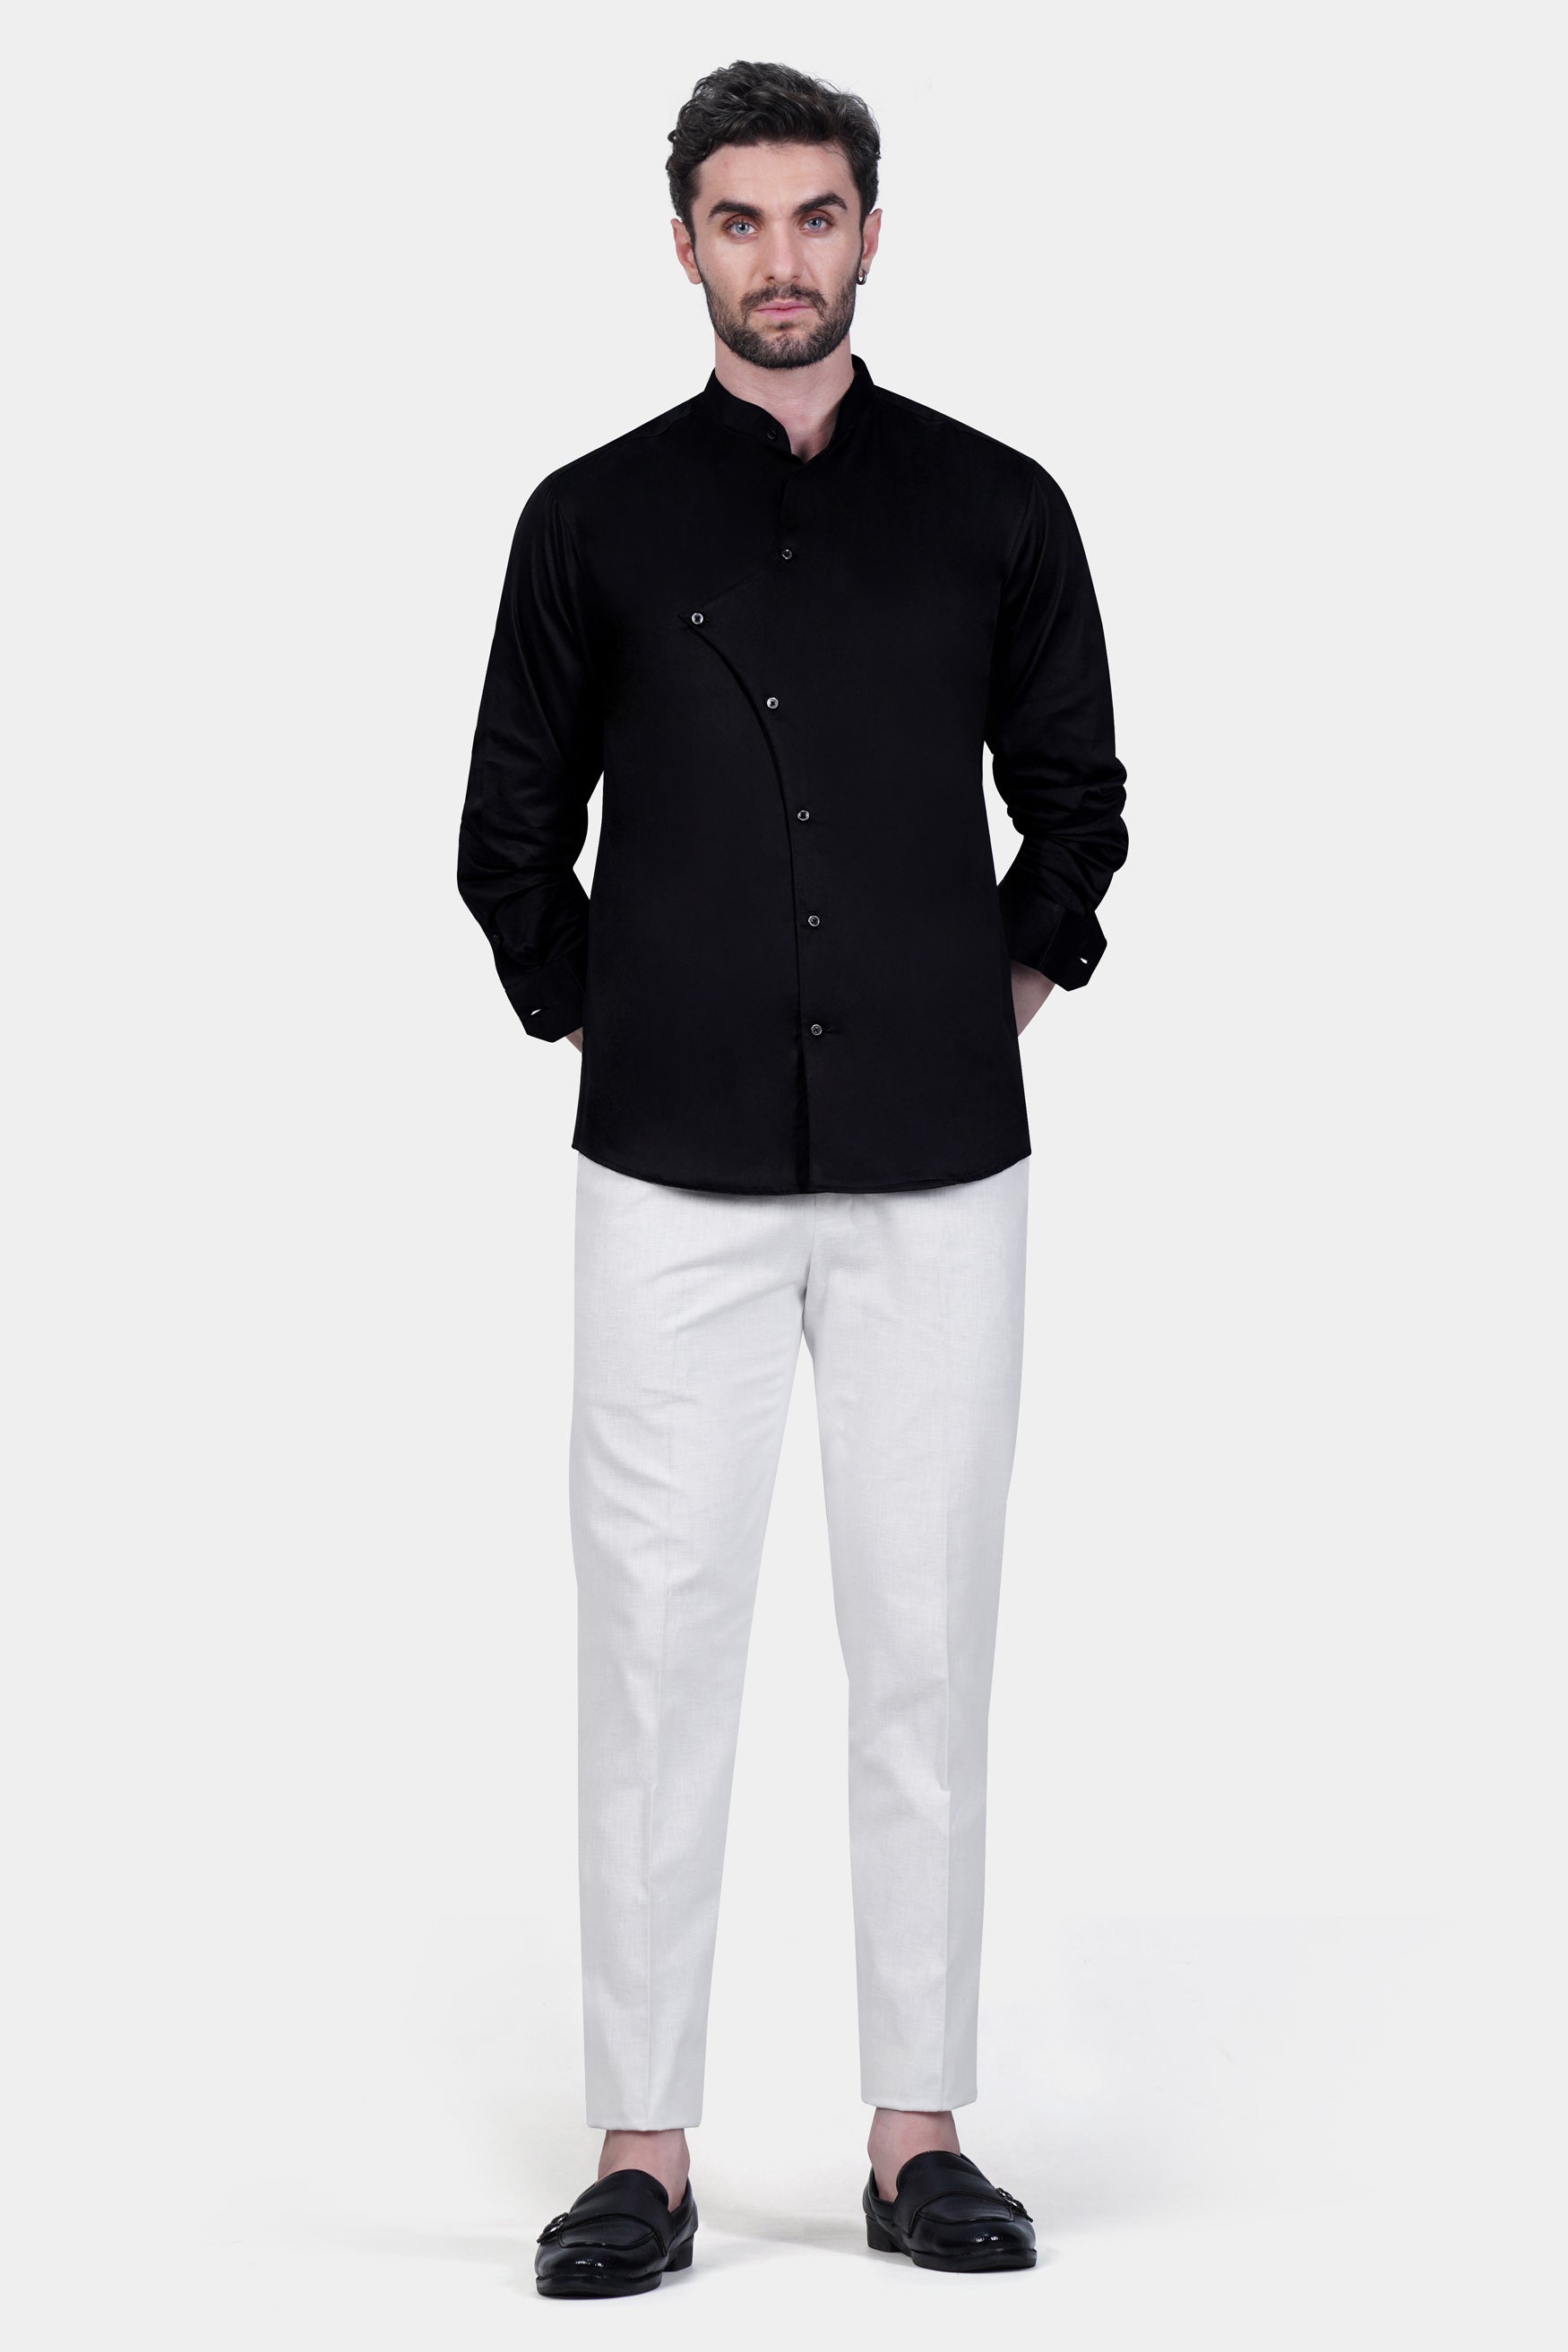 Jade Black Subtle Sheen Super Soft Premium Cotton Designer Shirt